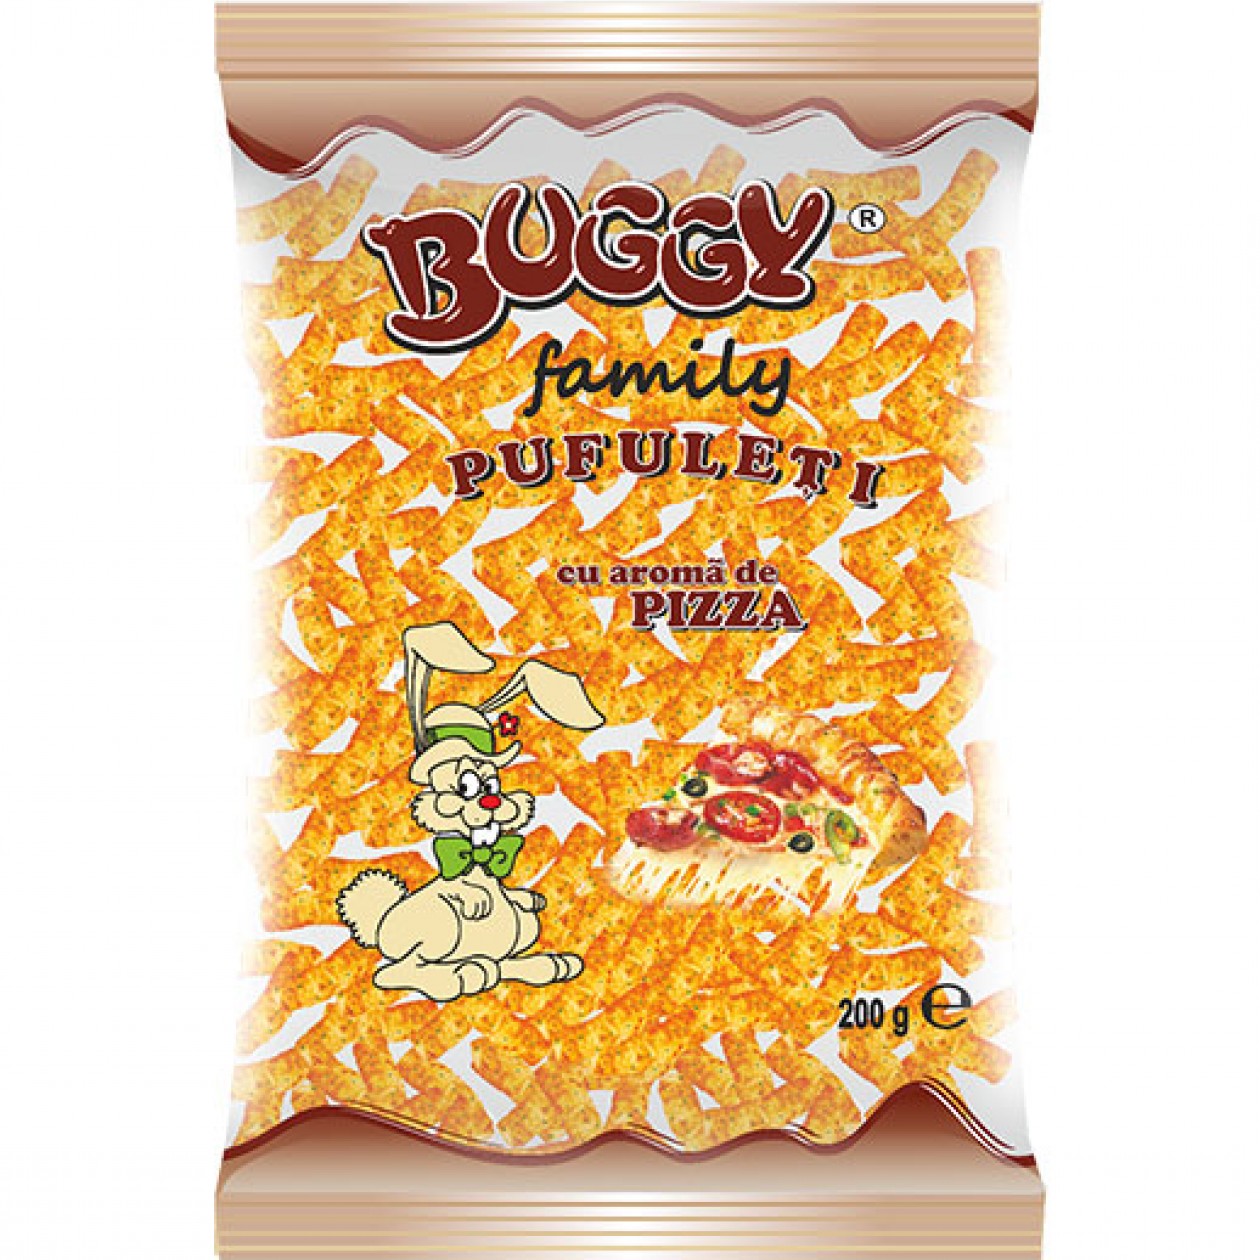 Buggy Family Corn Flips Pizza 200g